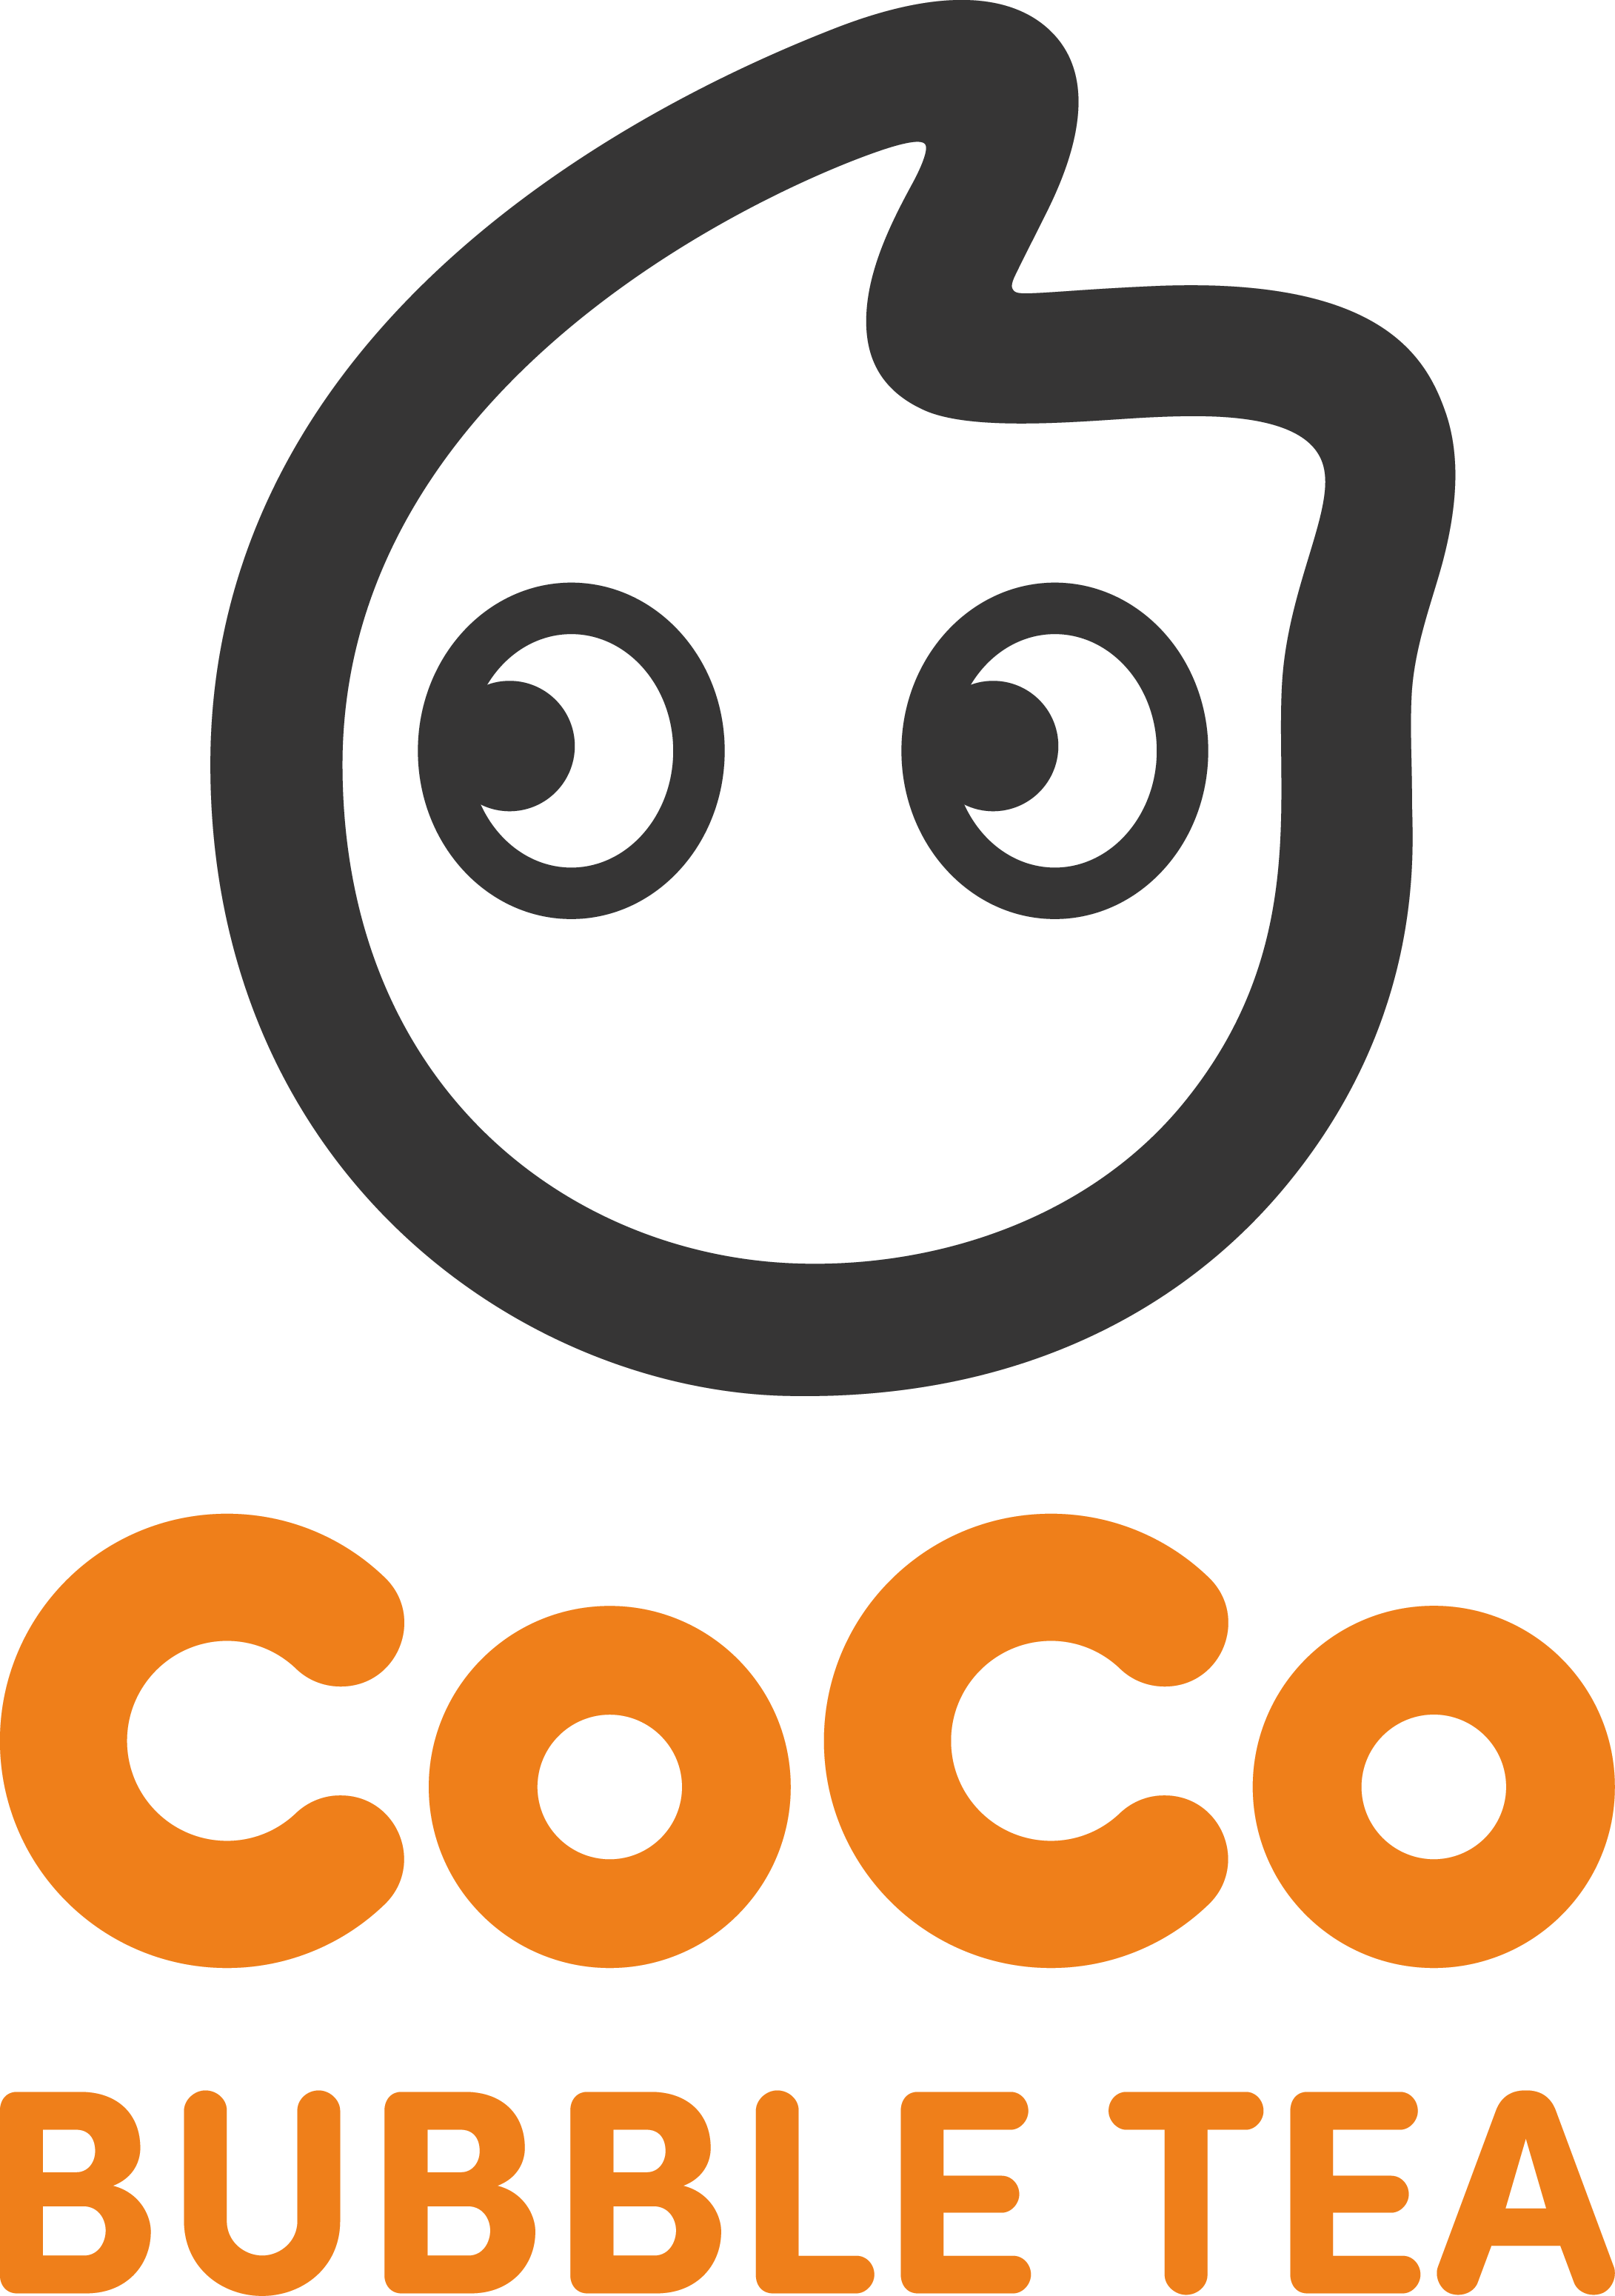 CoCo Fresh Tea & Juice